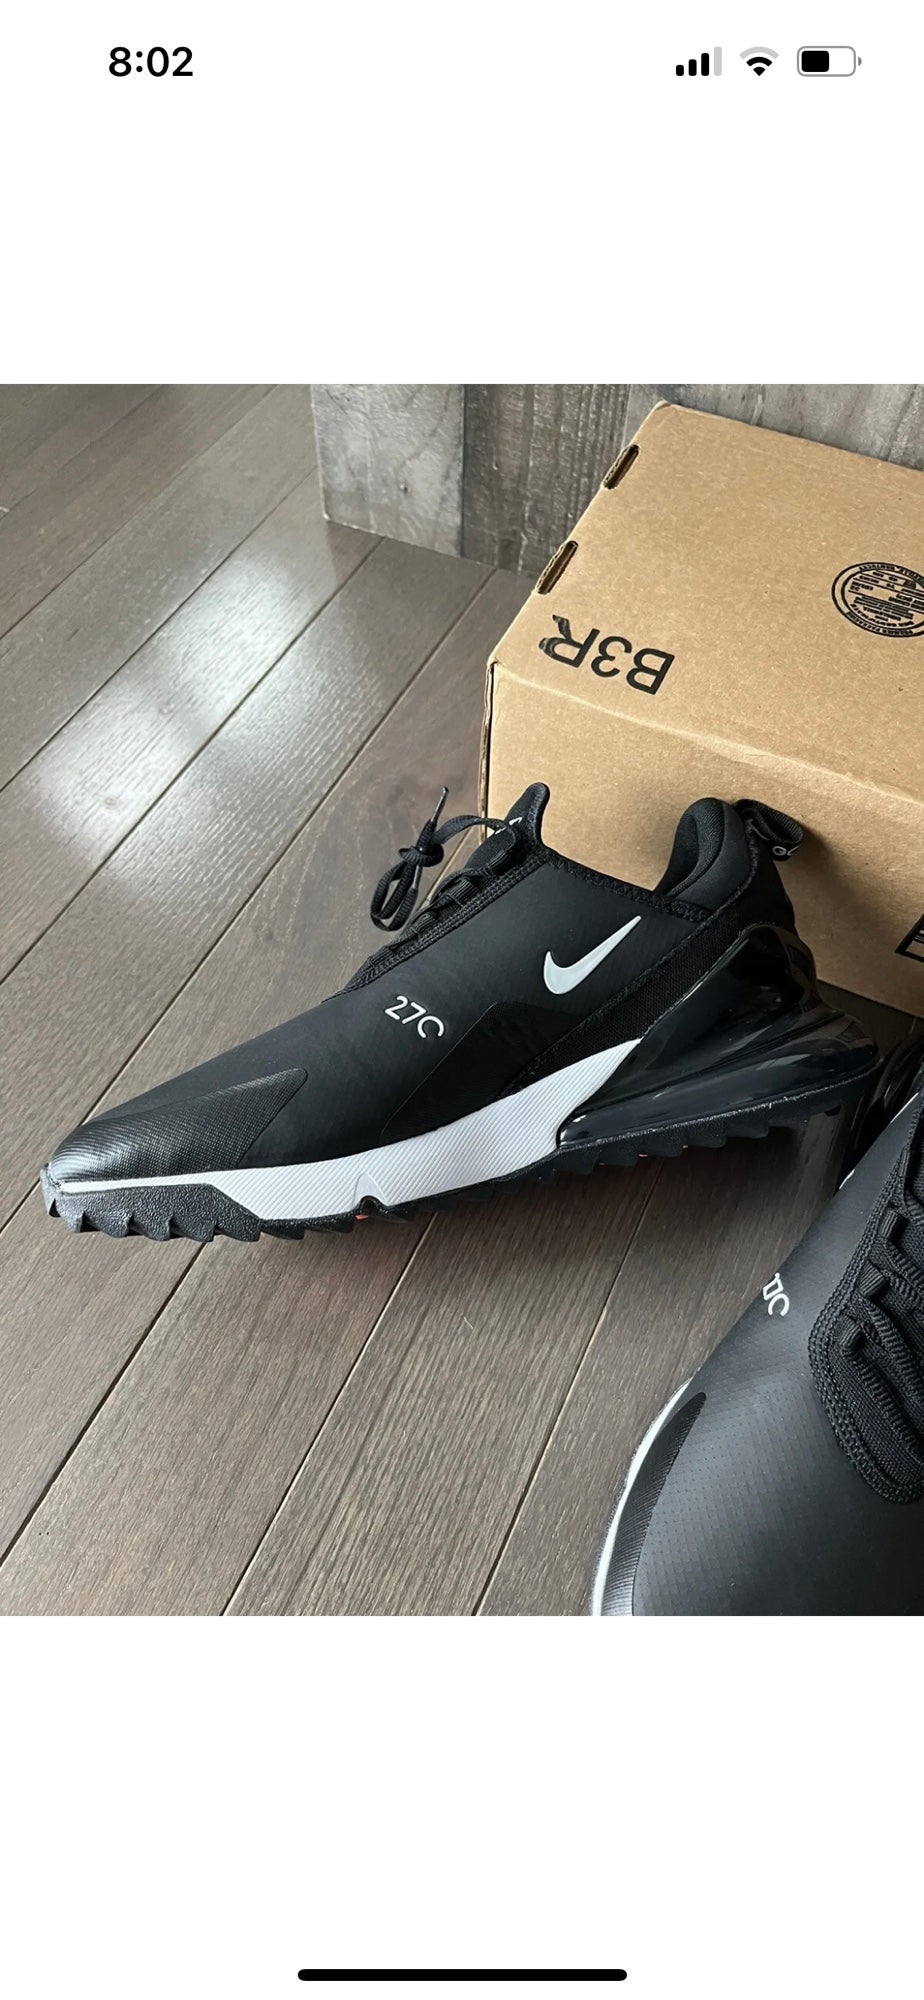 Nike Air Max 270 - Black White - on feet 